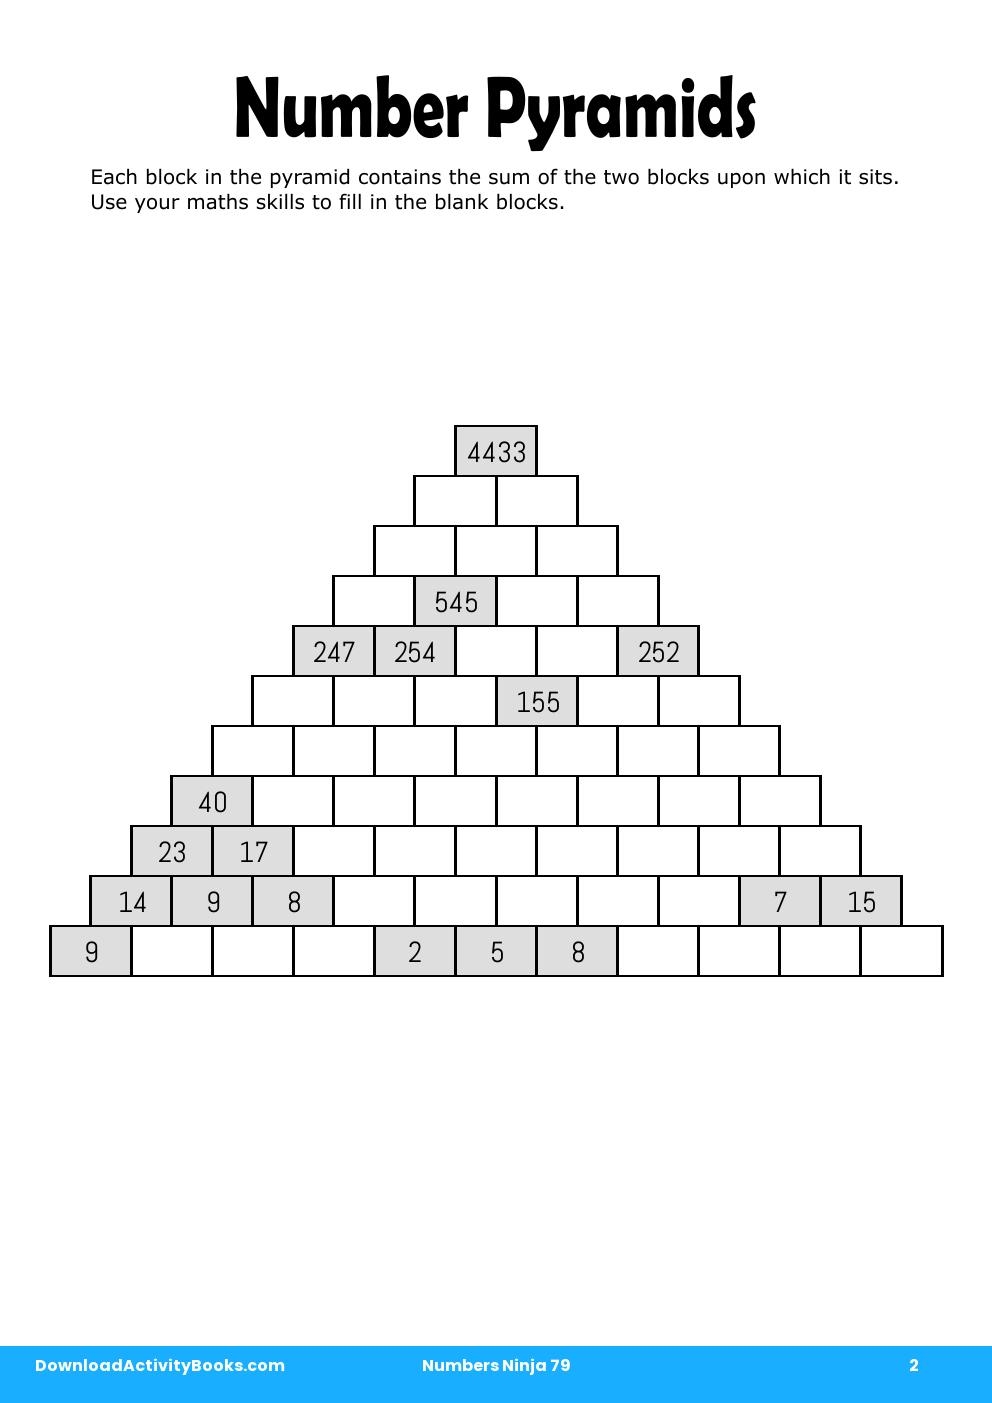 Number Pyramids in Numbers Ninja 79